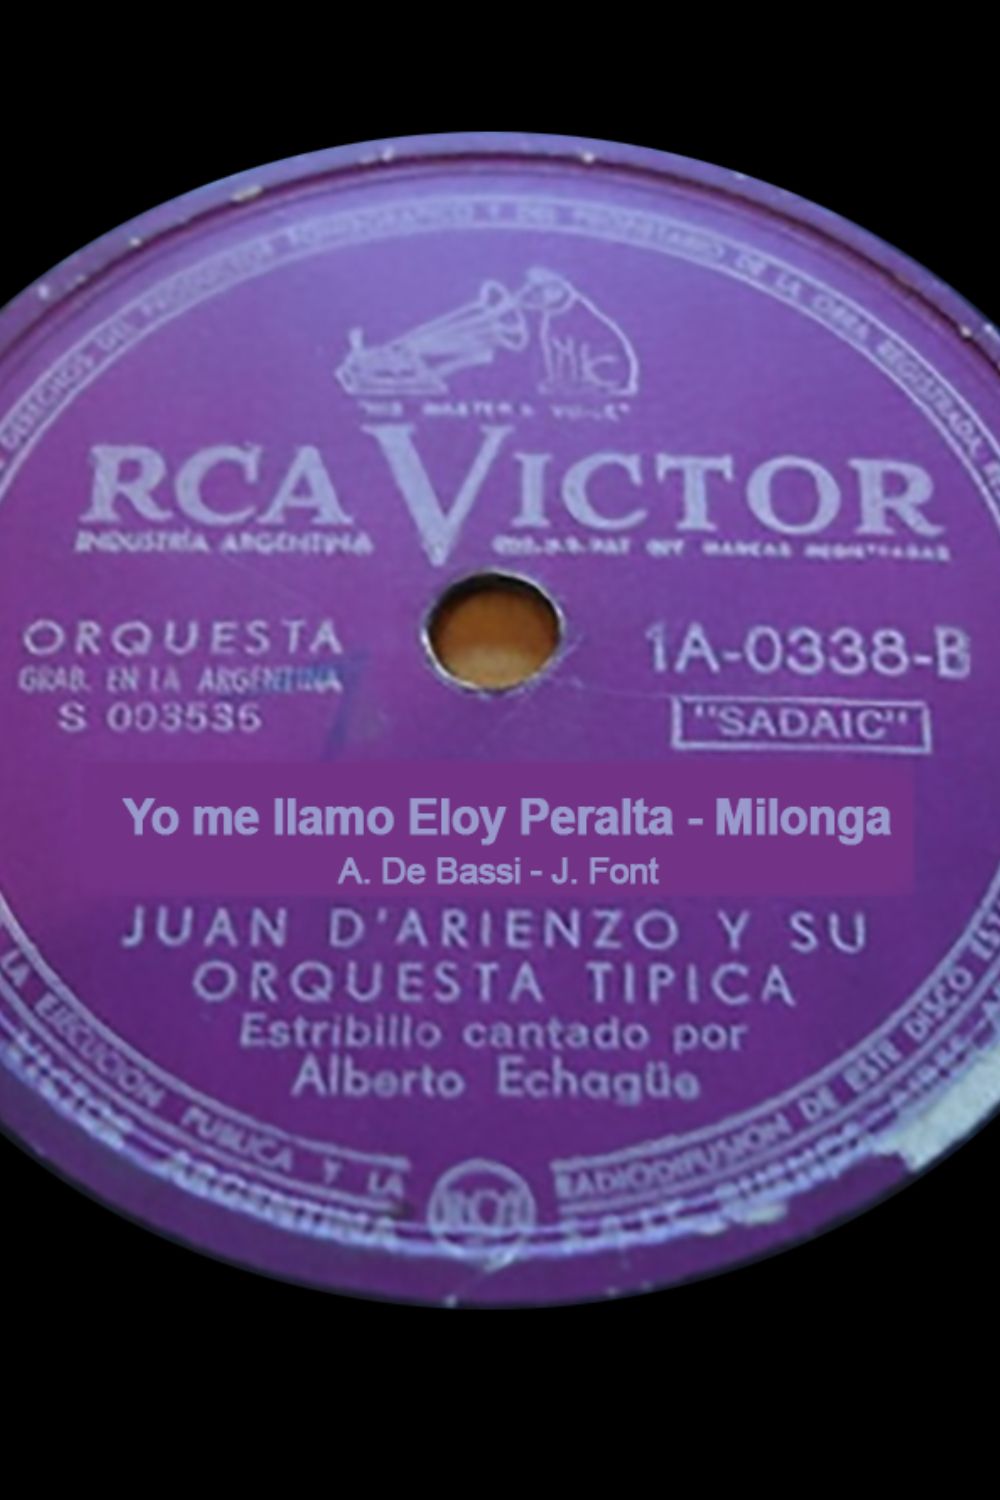 "Yo me llamo Eloy Peralta", vinyl disc Argentine Tango milonga